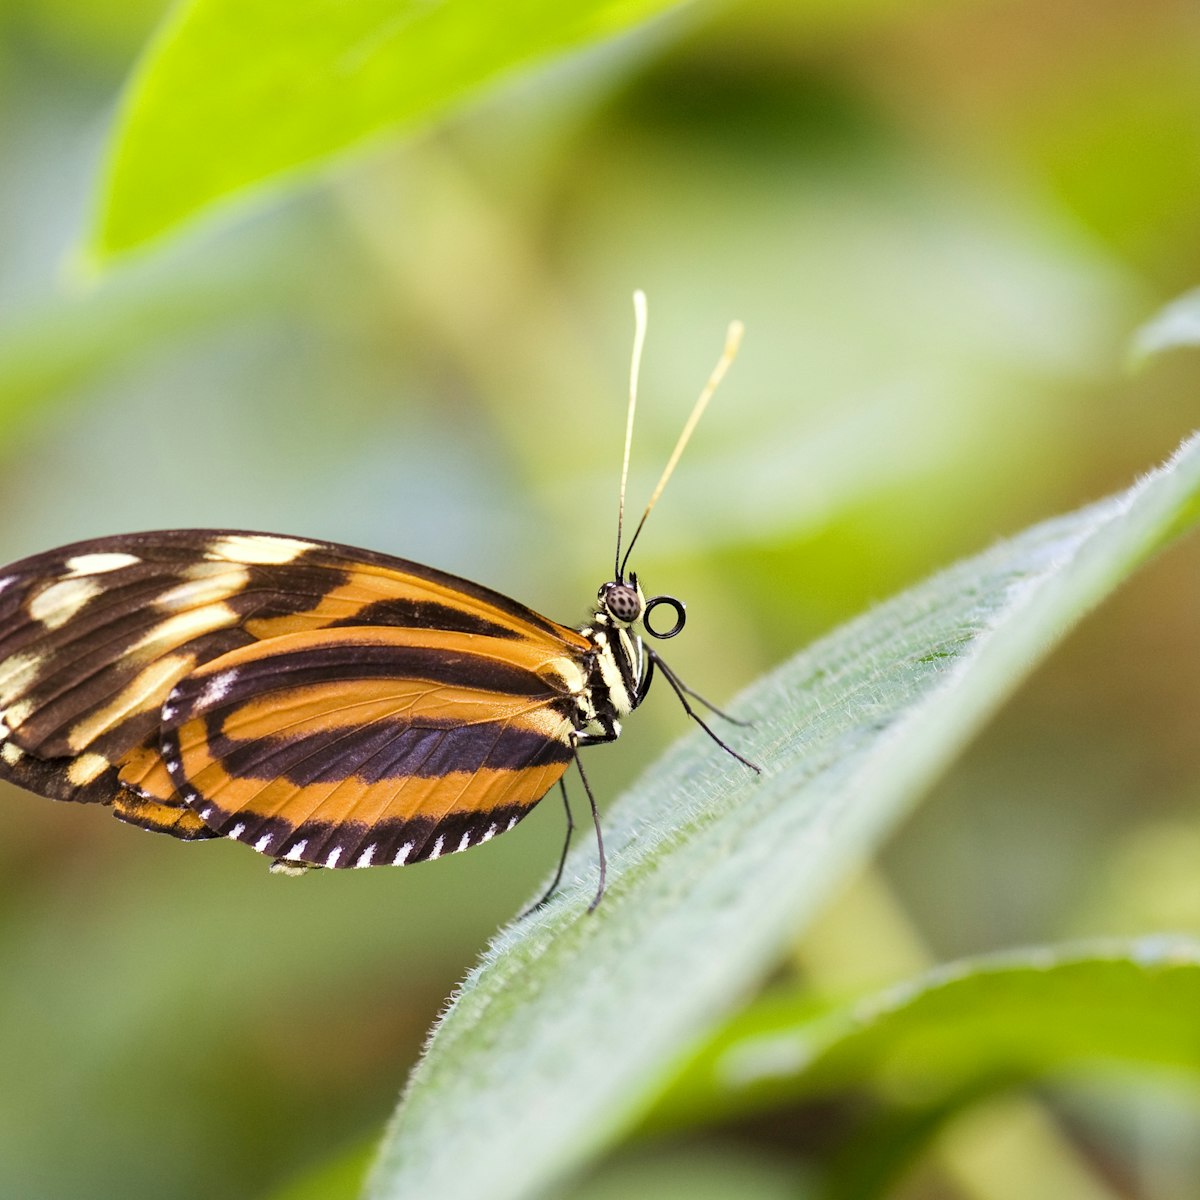 Costa Rica, Puntarenas province, Monteverde, Butterfly Garden